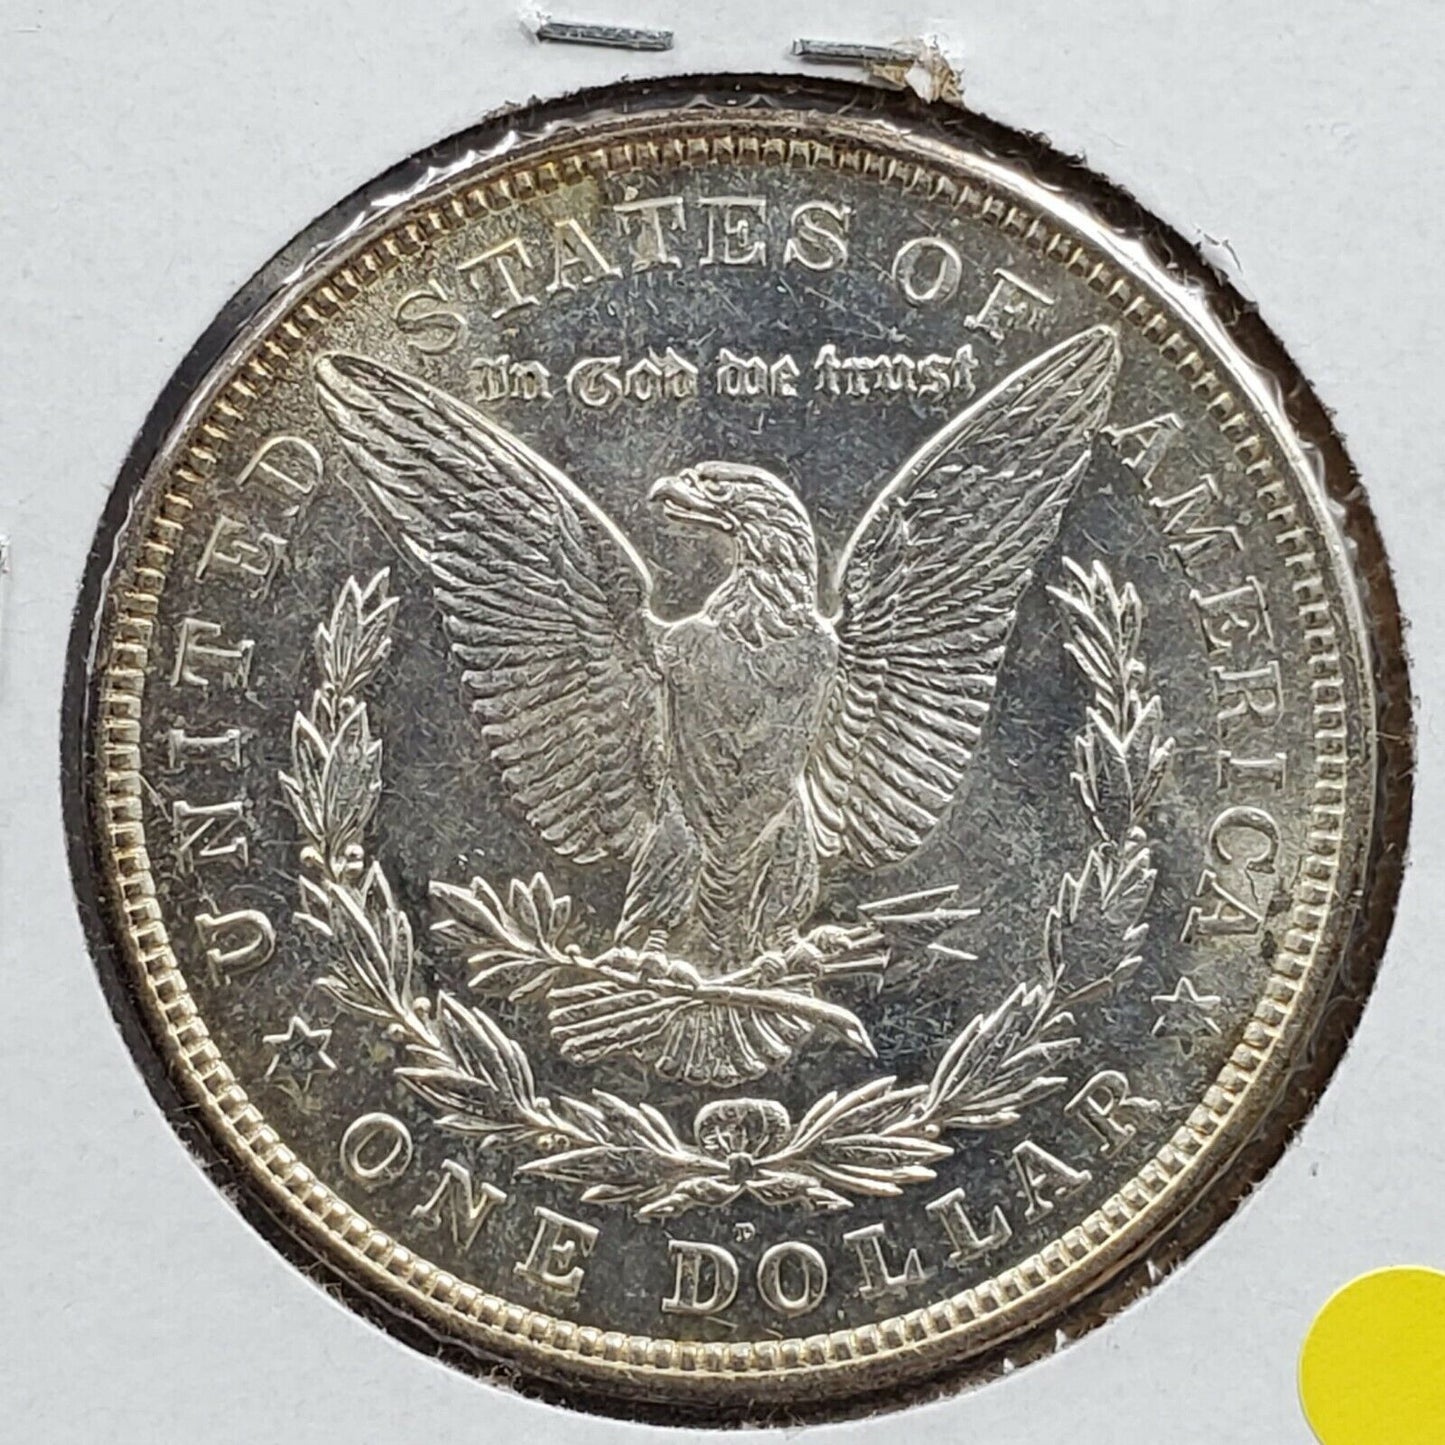 1921 D $1 Morgan Silver Dollar Coin Average Uncirculated 100 Year Anniversary